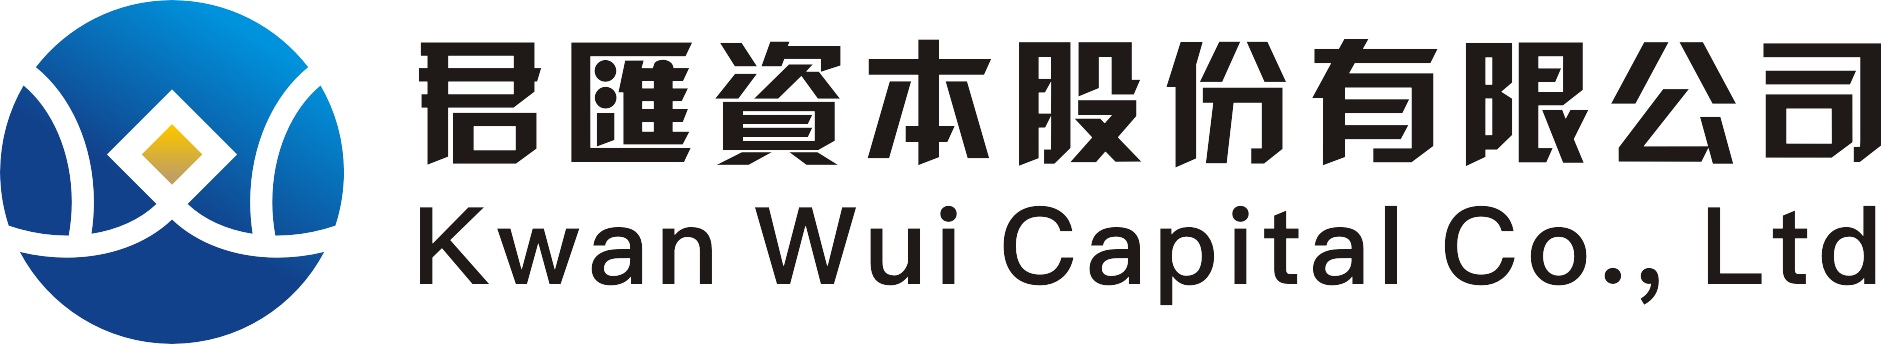 KwanWui